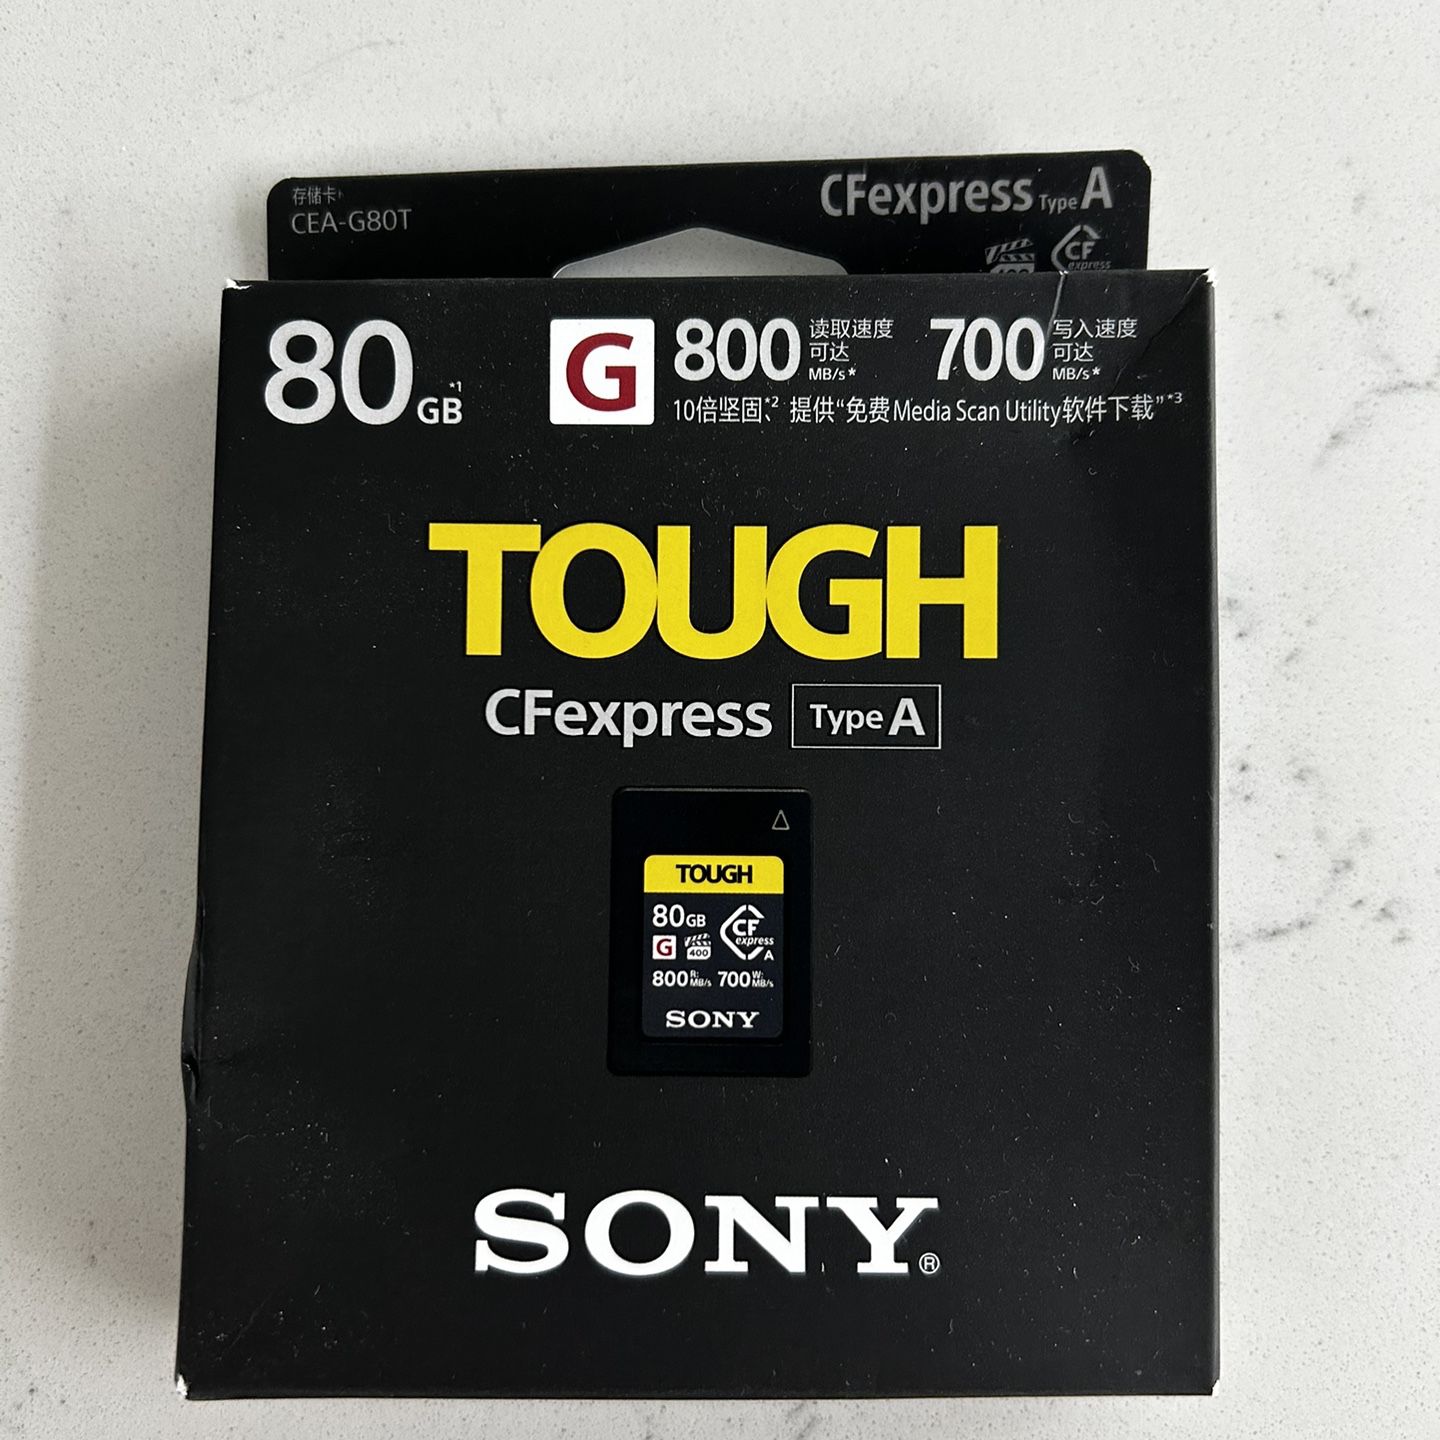 Sony 80GB CFexpress Type A TOUGH Memory Card CFA Card CEA